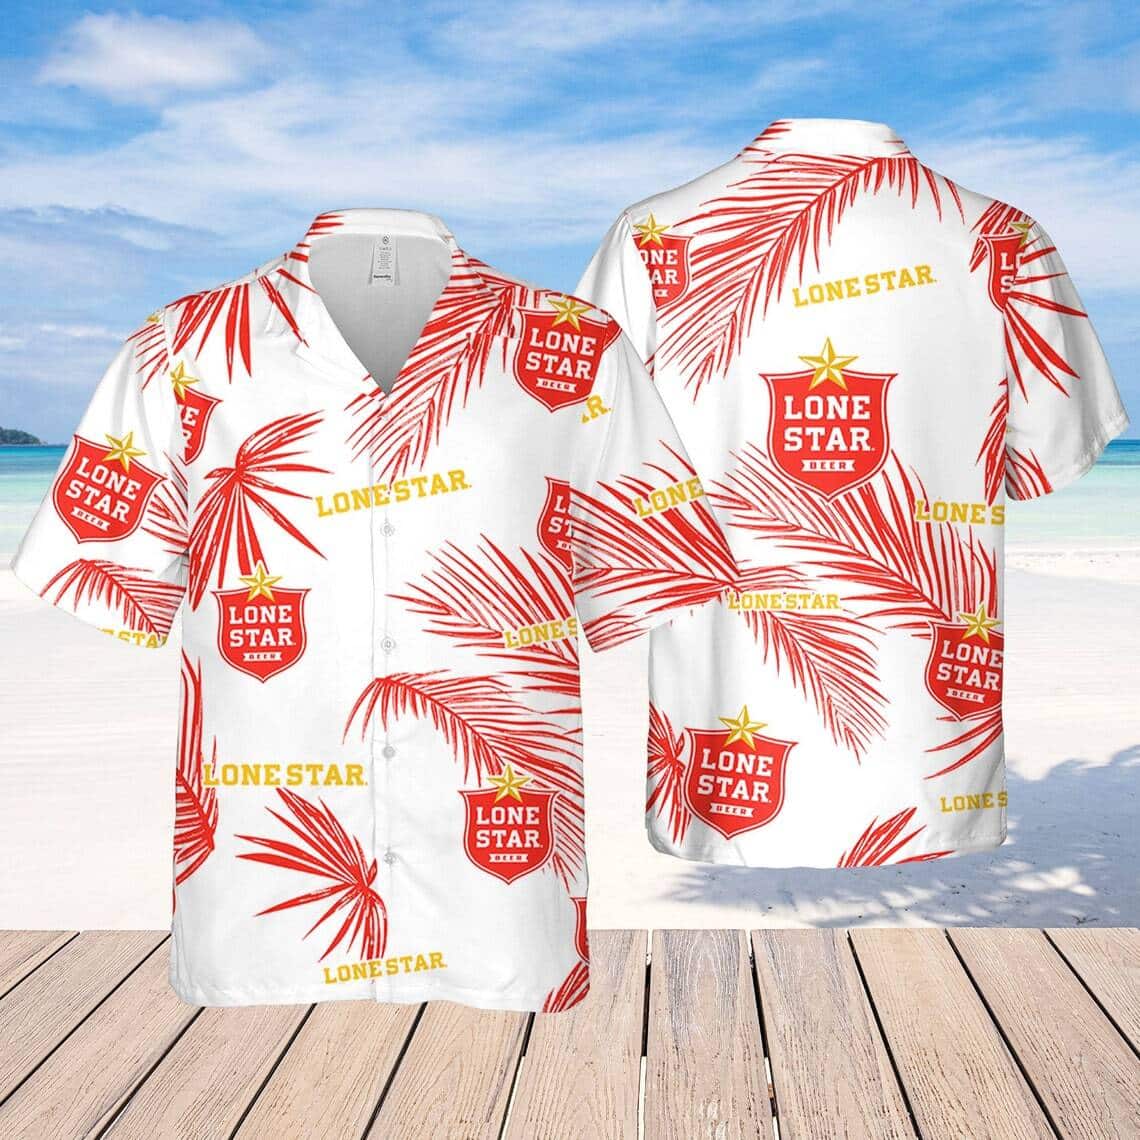 https://cdn.trendingshirtstore.com/735593/lone-star-palm-leaves-pattern-beach-lovers-gift-hawaiian-shirt_1x1.jpg